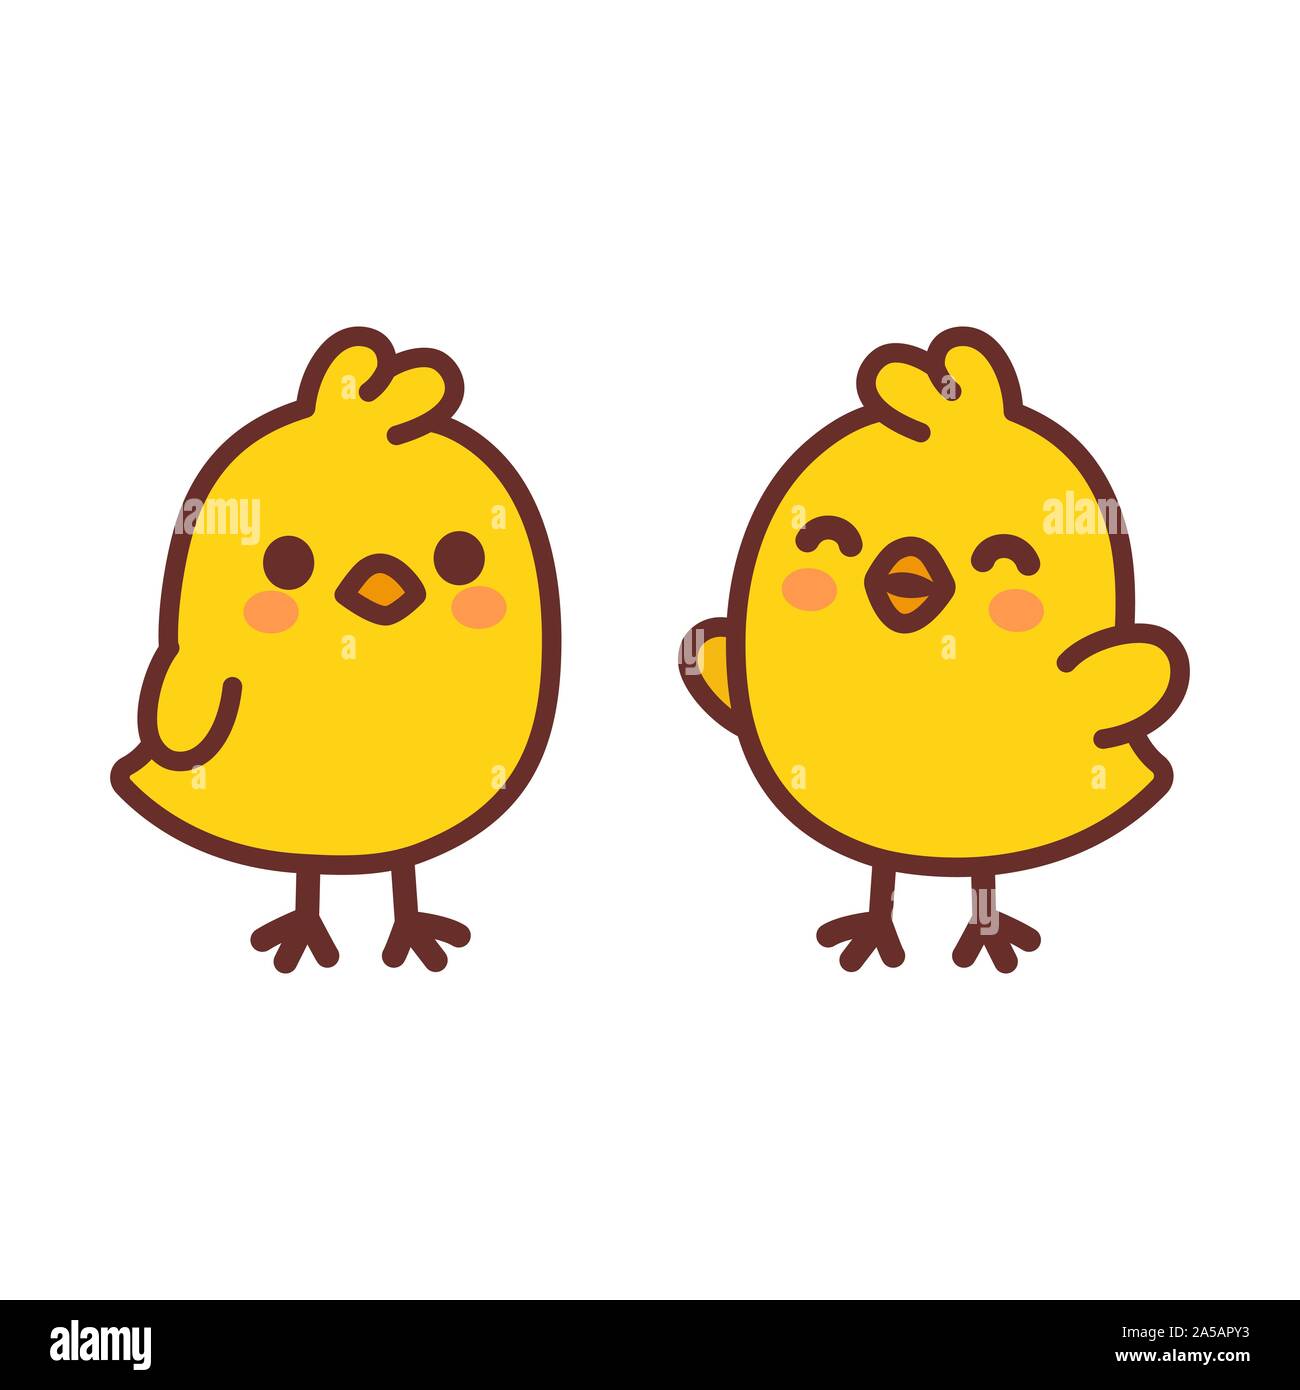 Cute Cartoon Baby Huhner Zwei Lustige Gelbe Kuken Einfach Kawaii Stil Vector Clip Art Illustration Stock Vektorgrafik Alamy